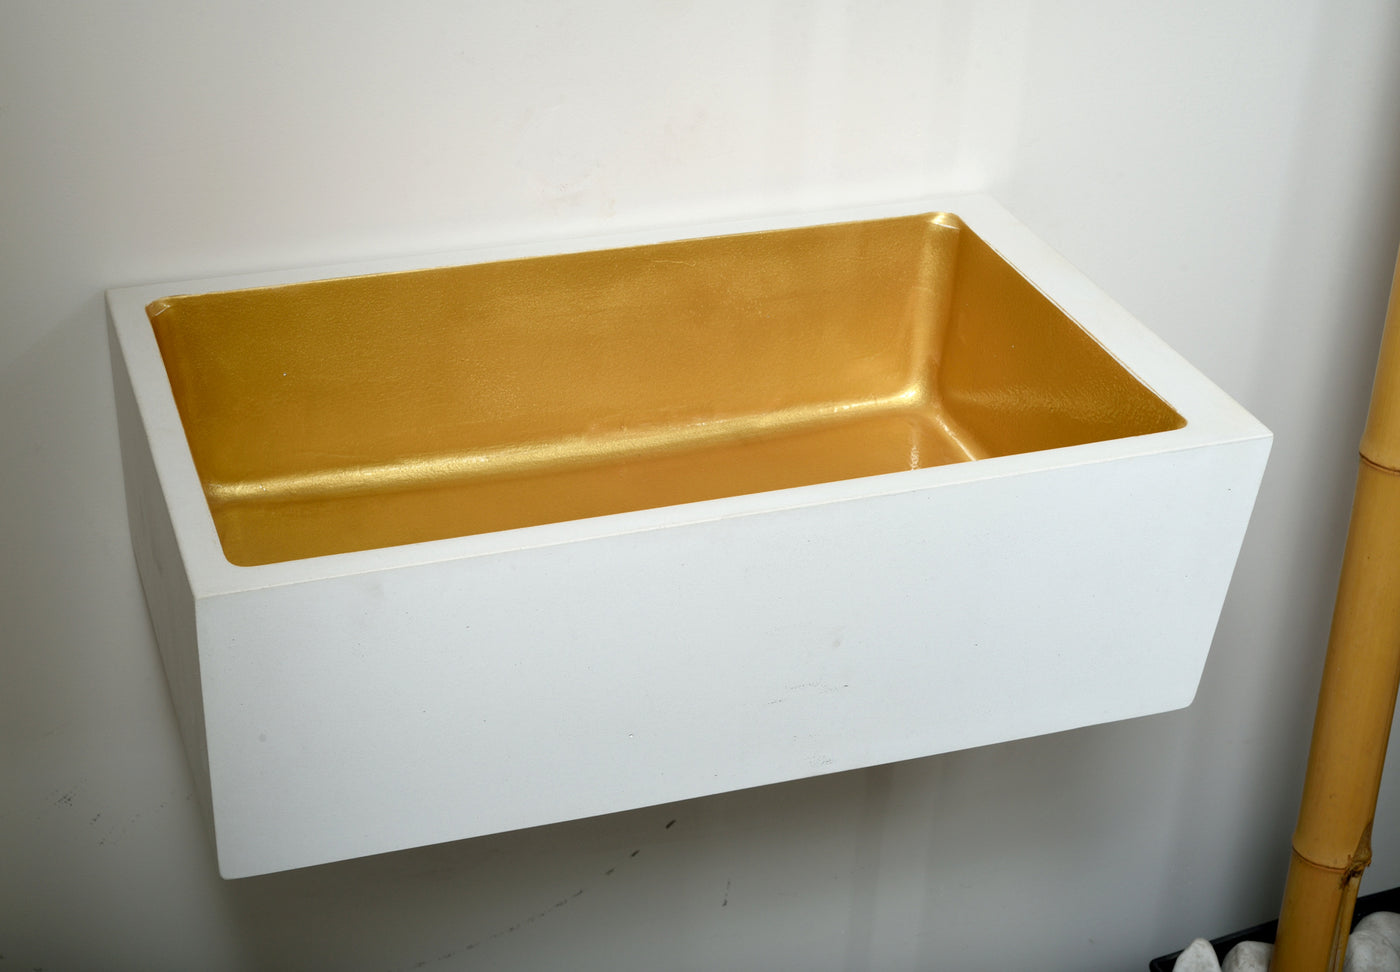 Irio - Gold Bathroom Sink - robertotiranti.shop